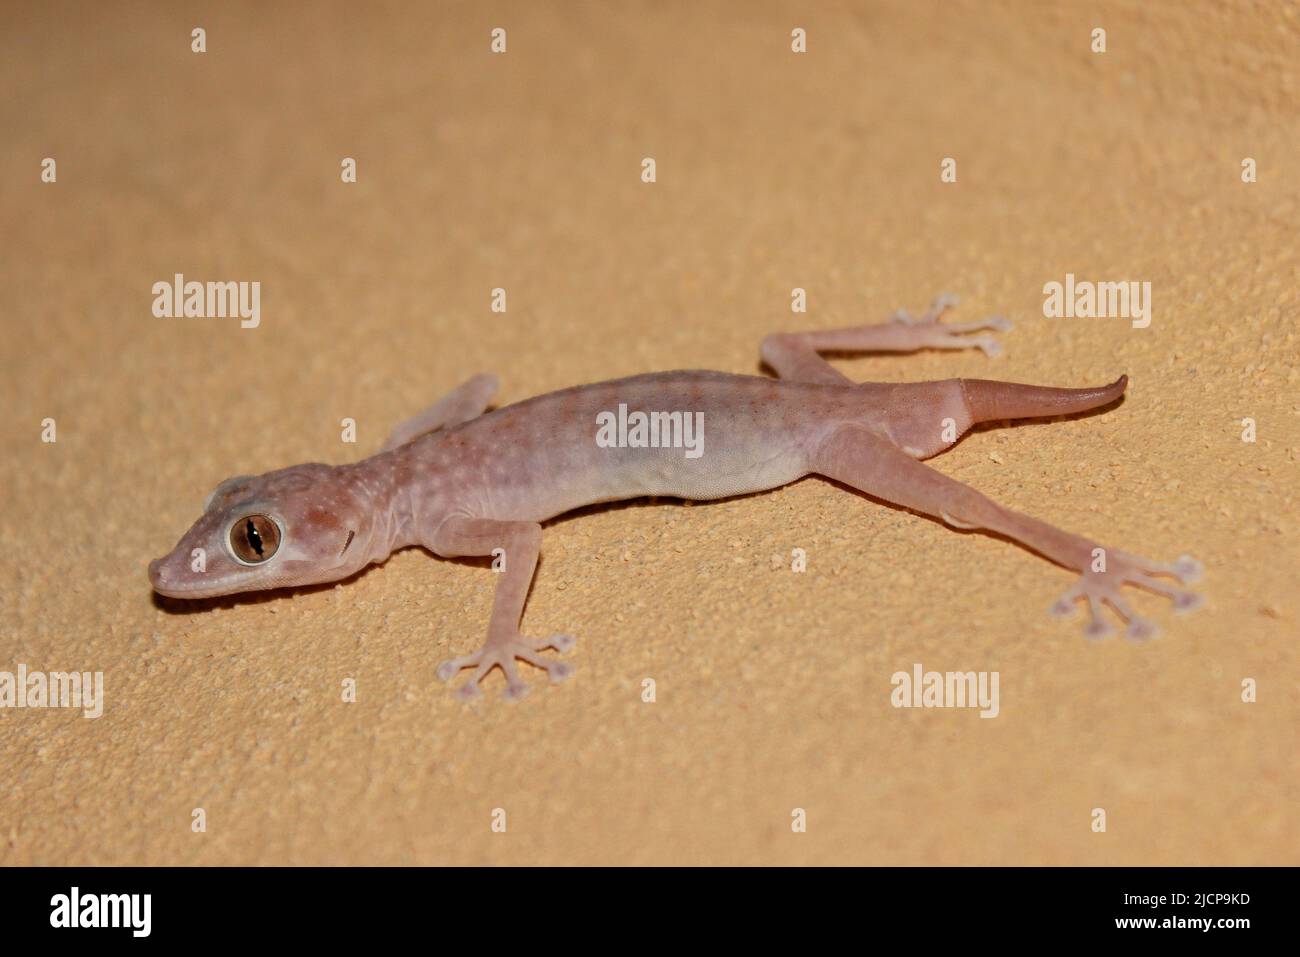 Young Mediterranean House Gecko (Hemidactylus turcicus) whose tail has re-grown Stock Photo